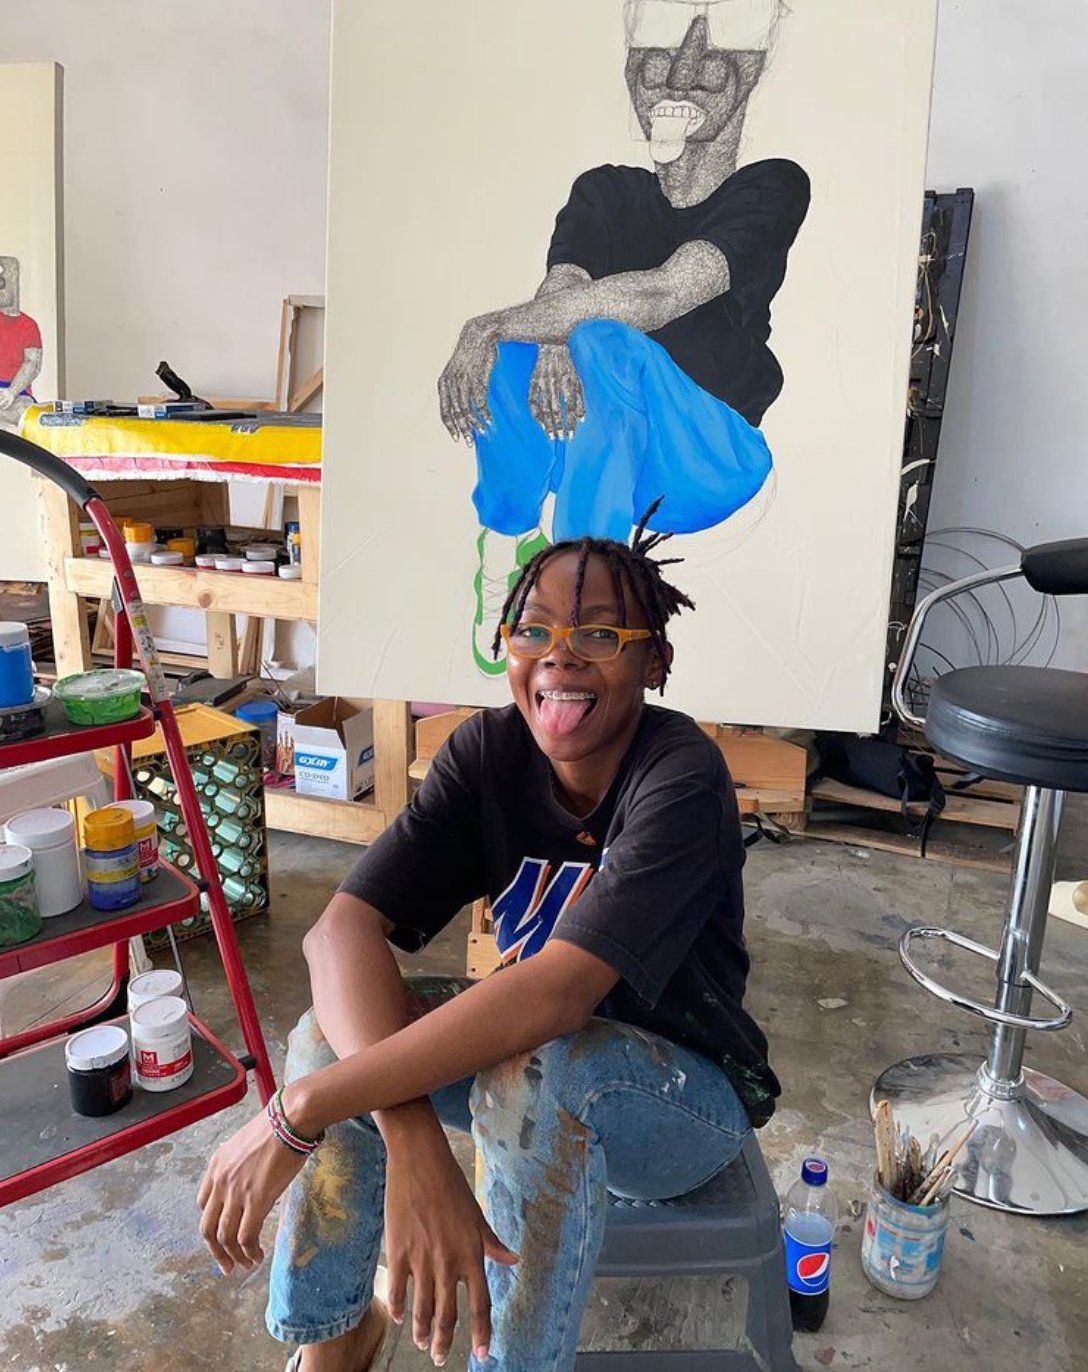 OP-ED: Ayanfe Olarinde Is Taking Her Fine Art Onto A Global Digital Stage Via NFT Tech